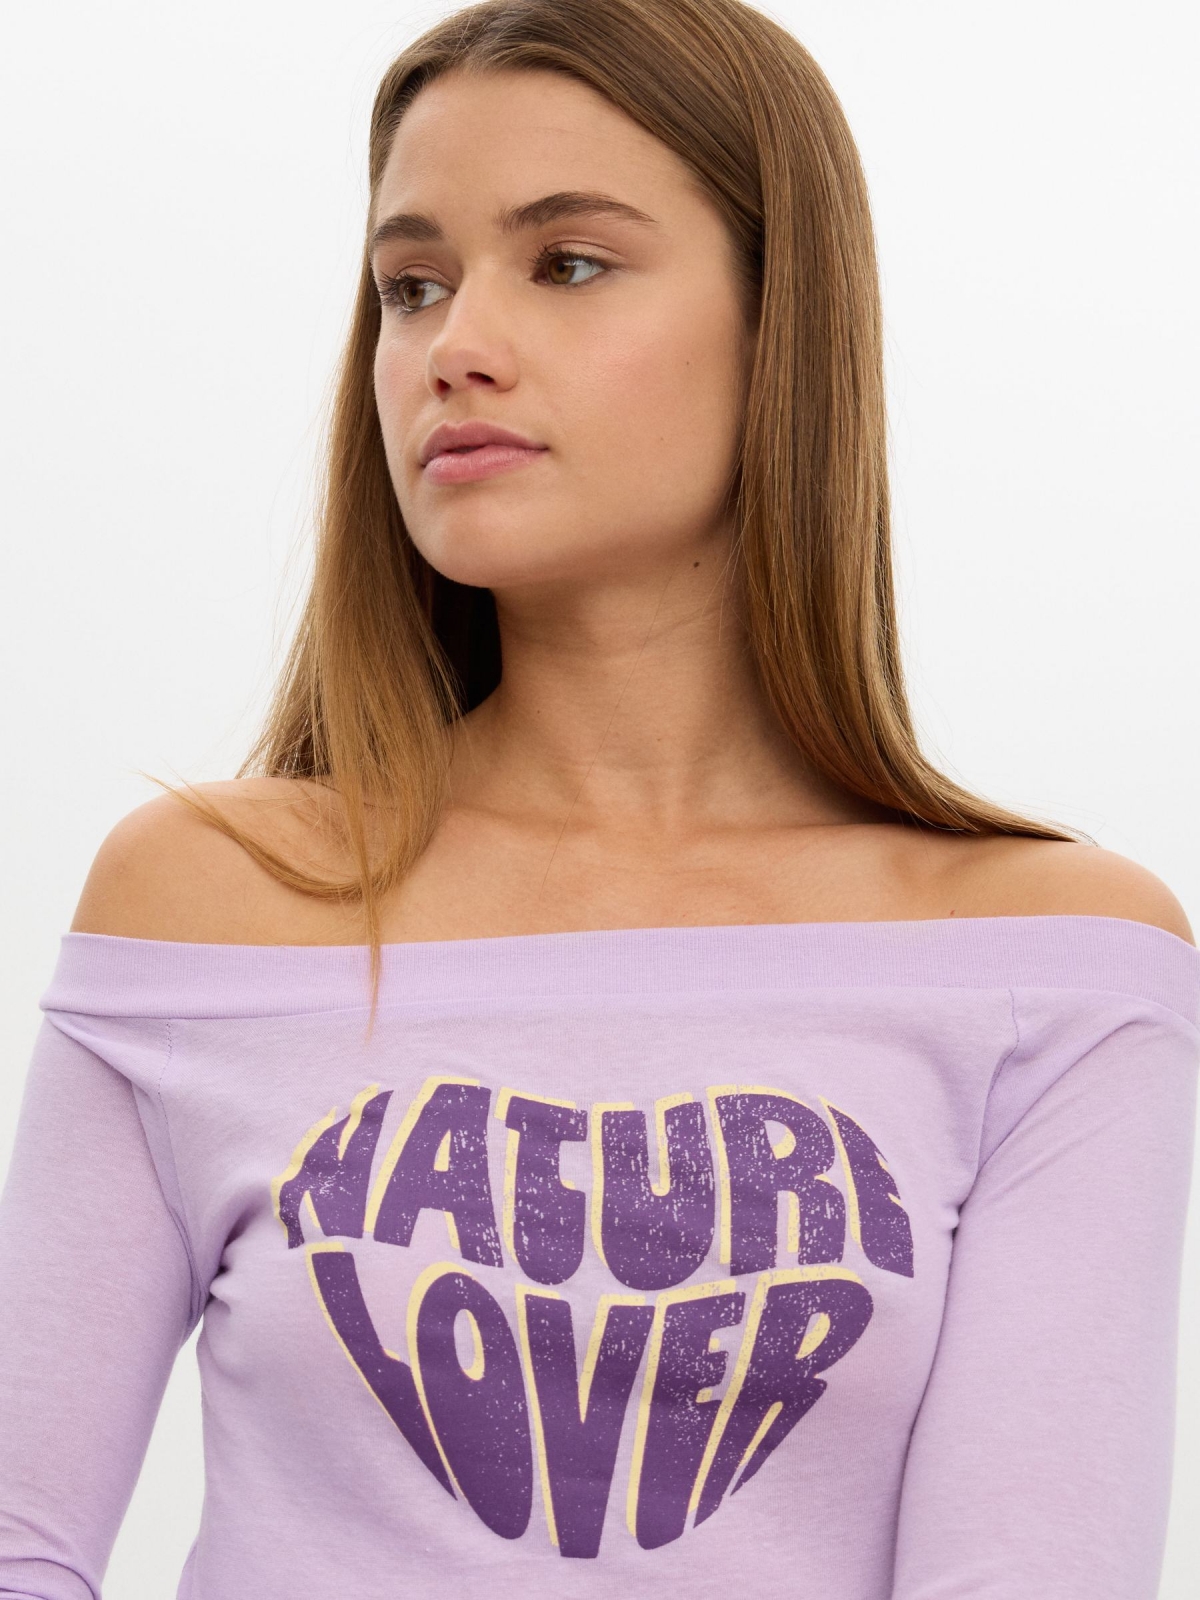 T-shirt do Natural Lover lilás vista detalhe